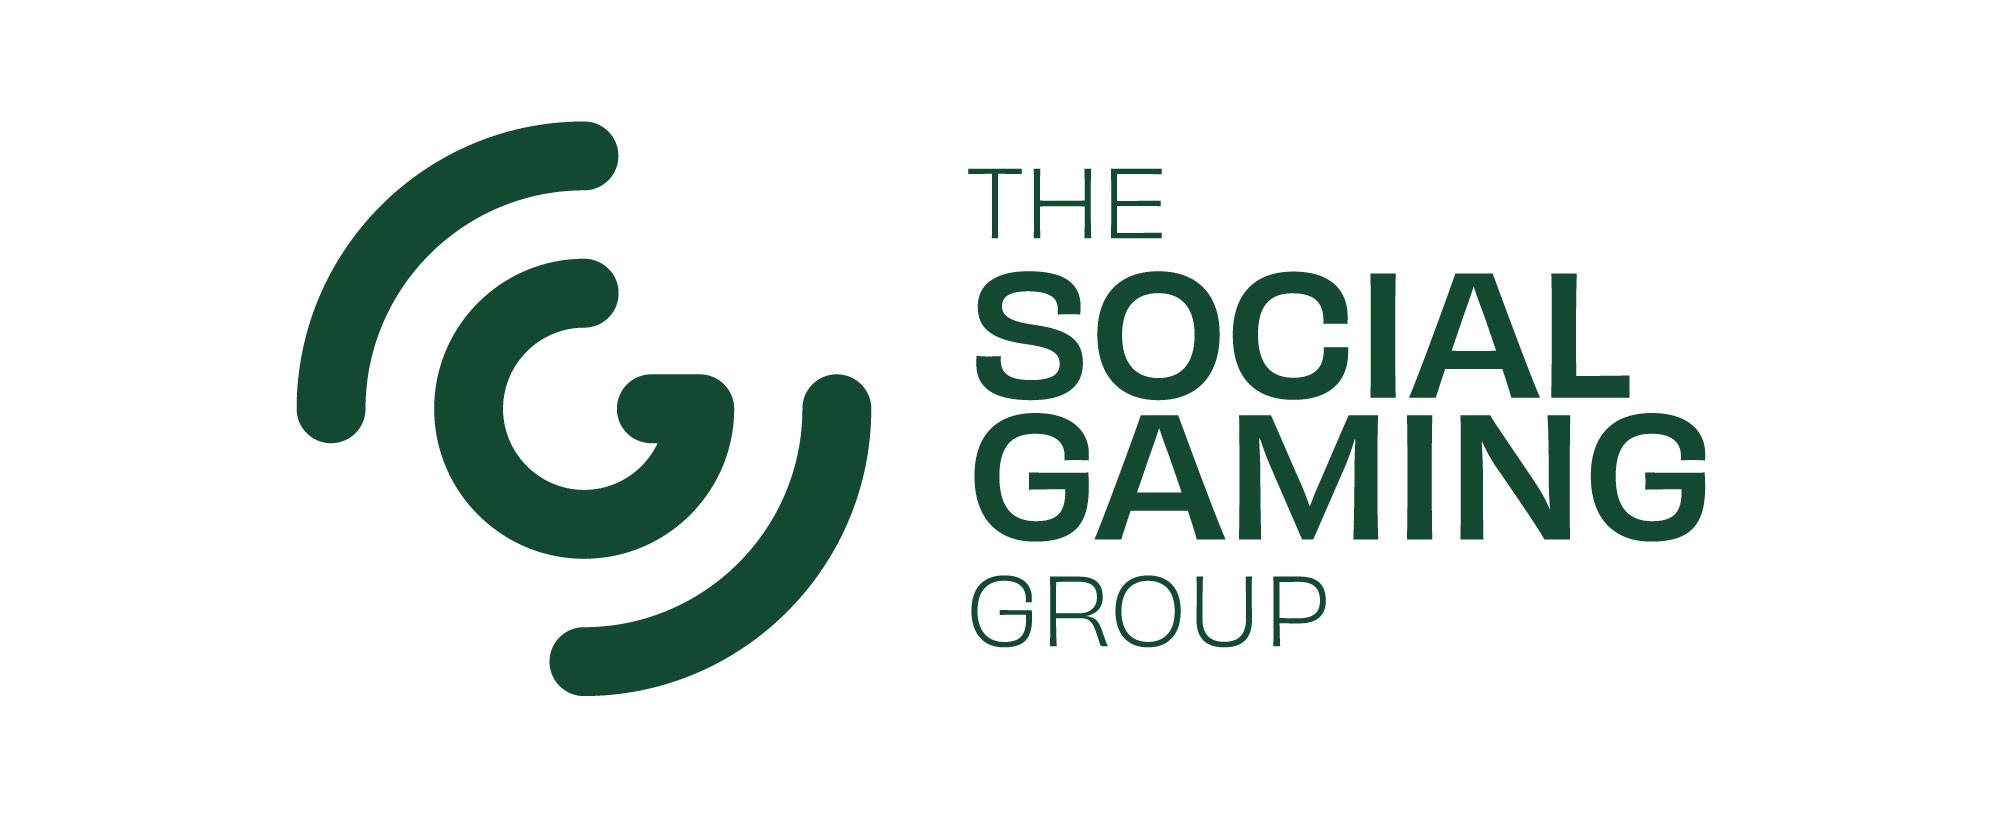 The Social Gaming Group